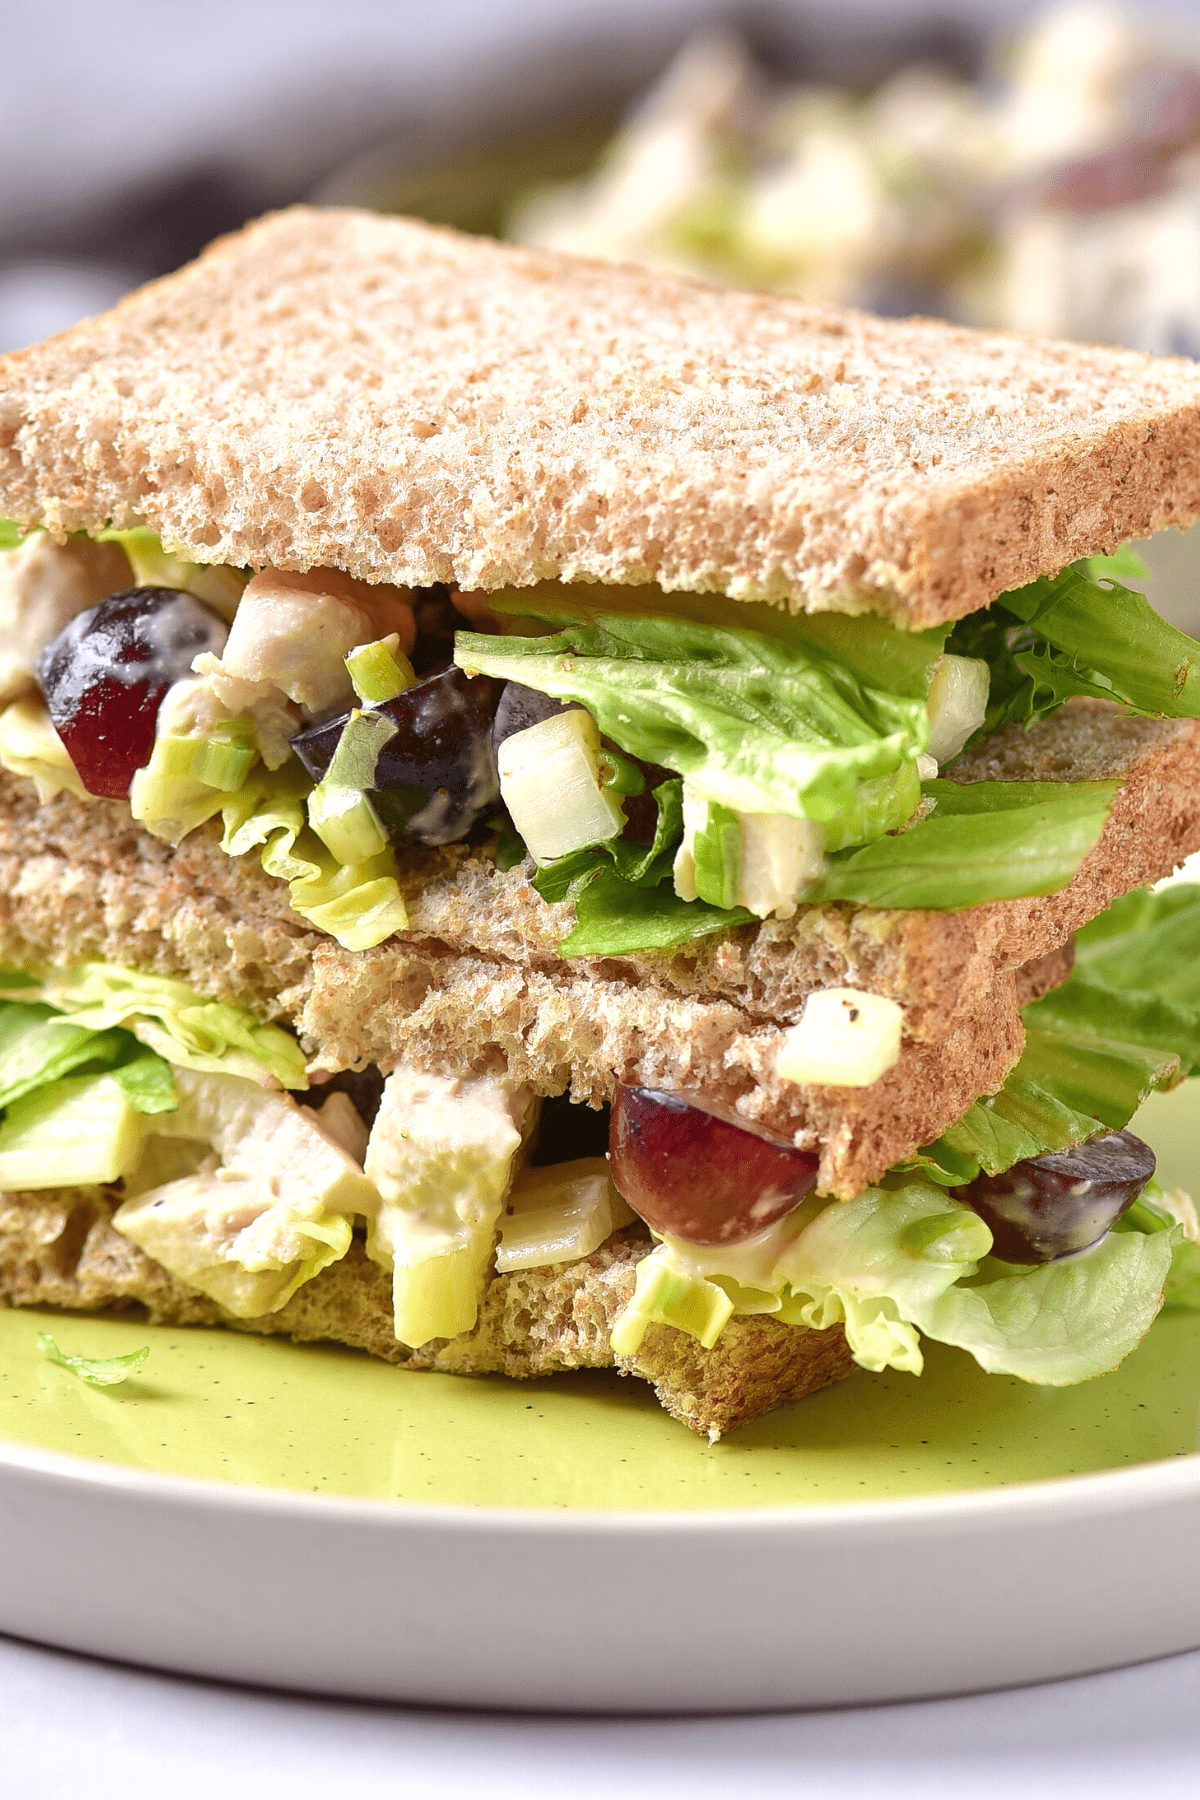 A gluten-free chicken salad sandwich on a plate.